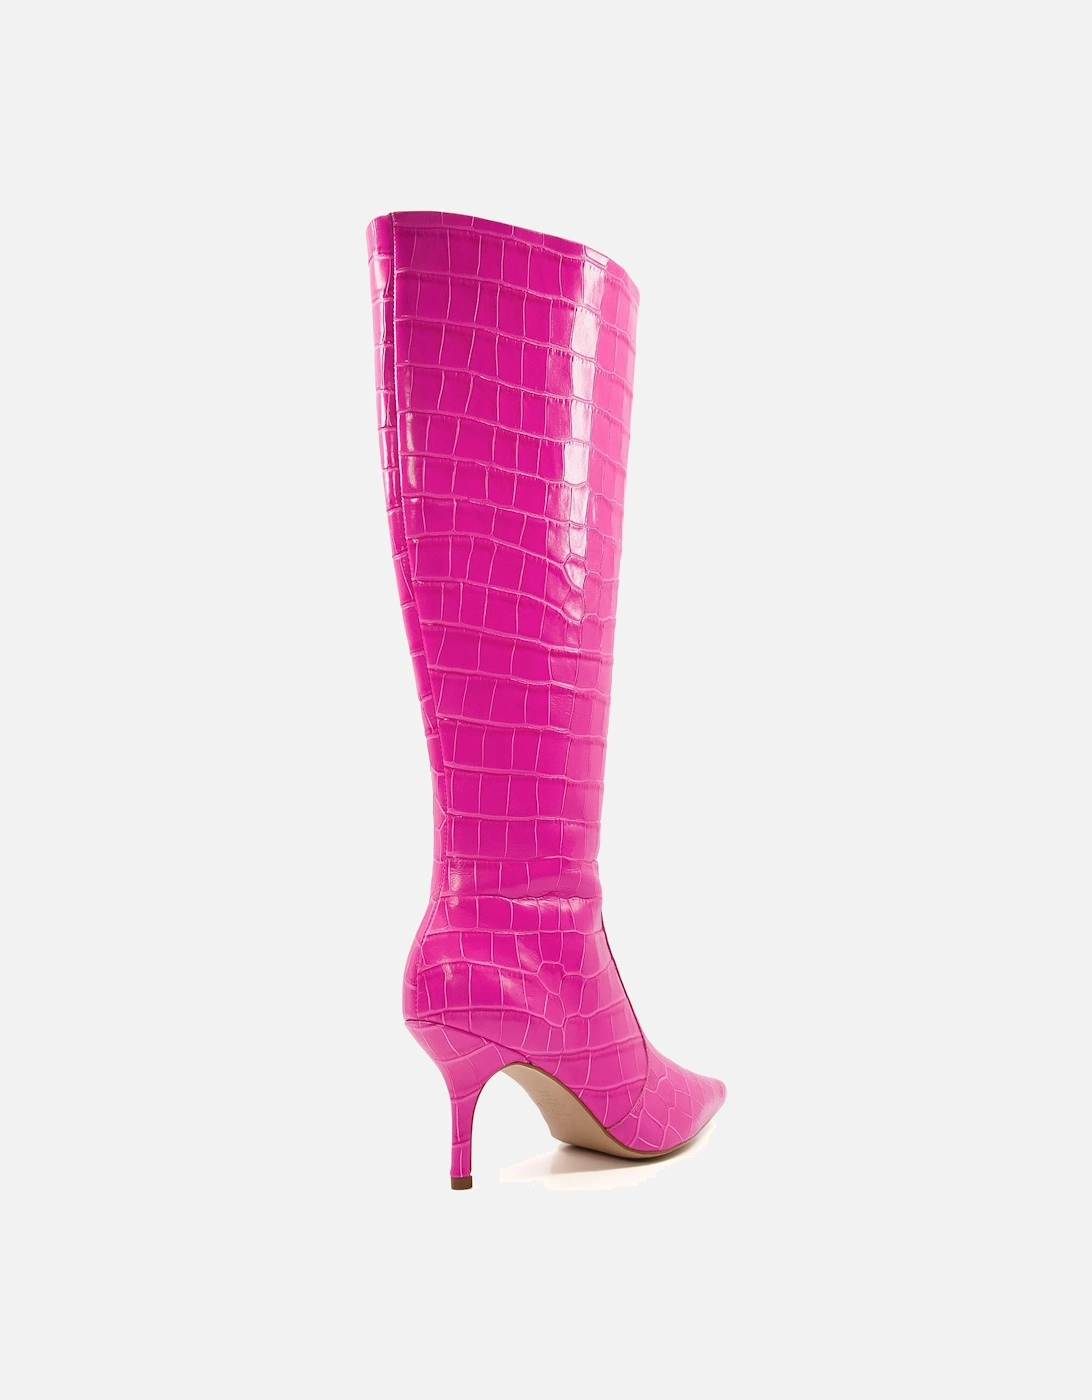 Ladies Spritz - Croc-Effect Leather Knee-High Boots